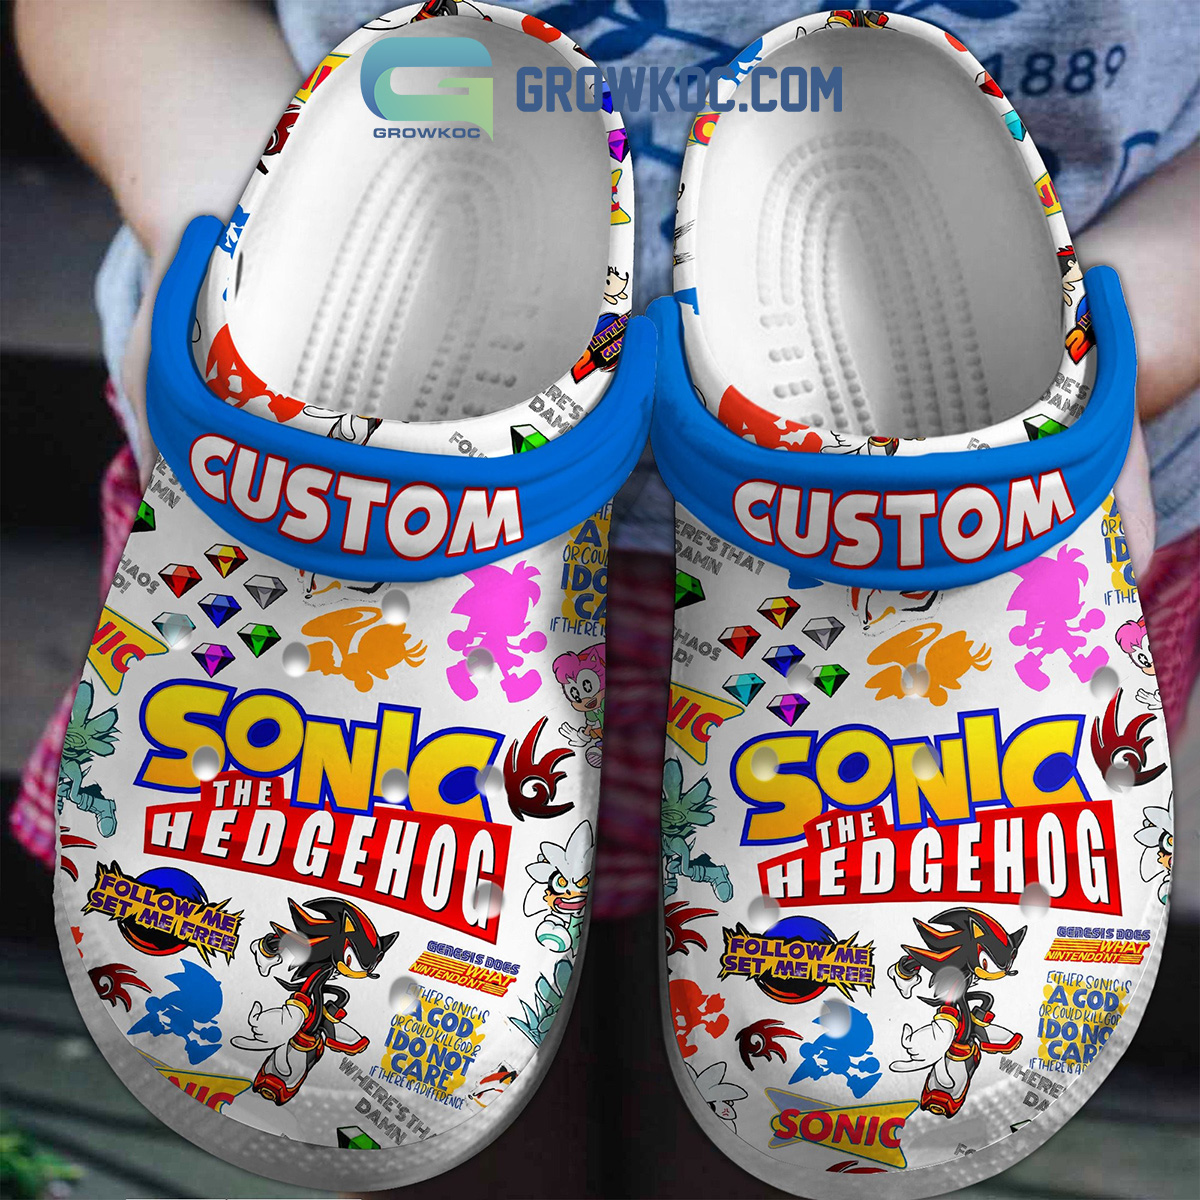 Sonic The Hedgehog Follow Me Set Me Free Personalized Clogs Crocs - Growkoc